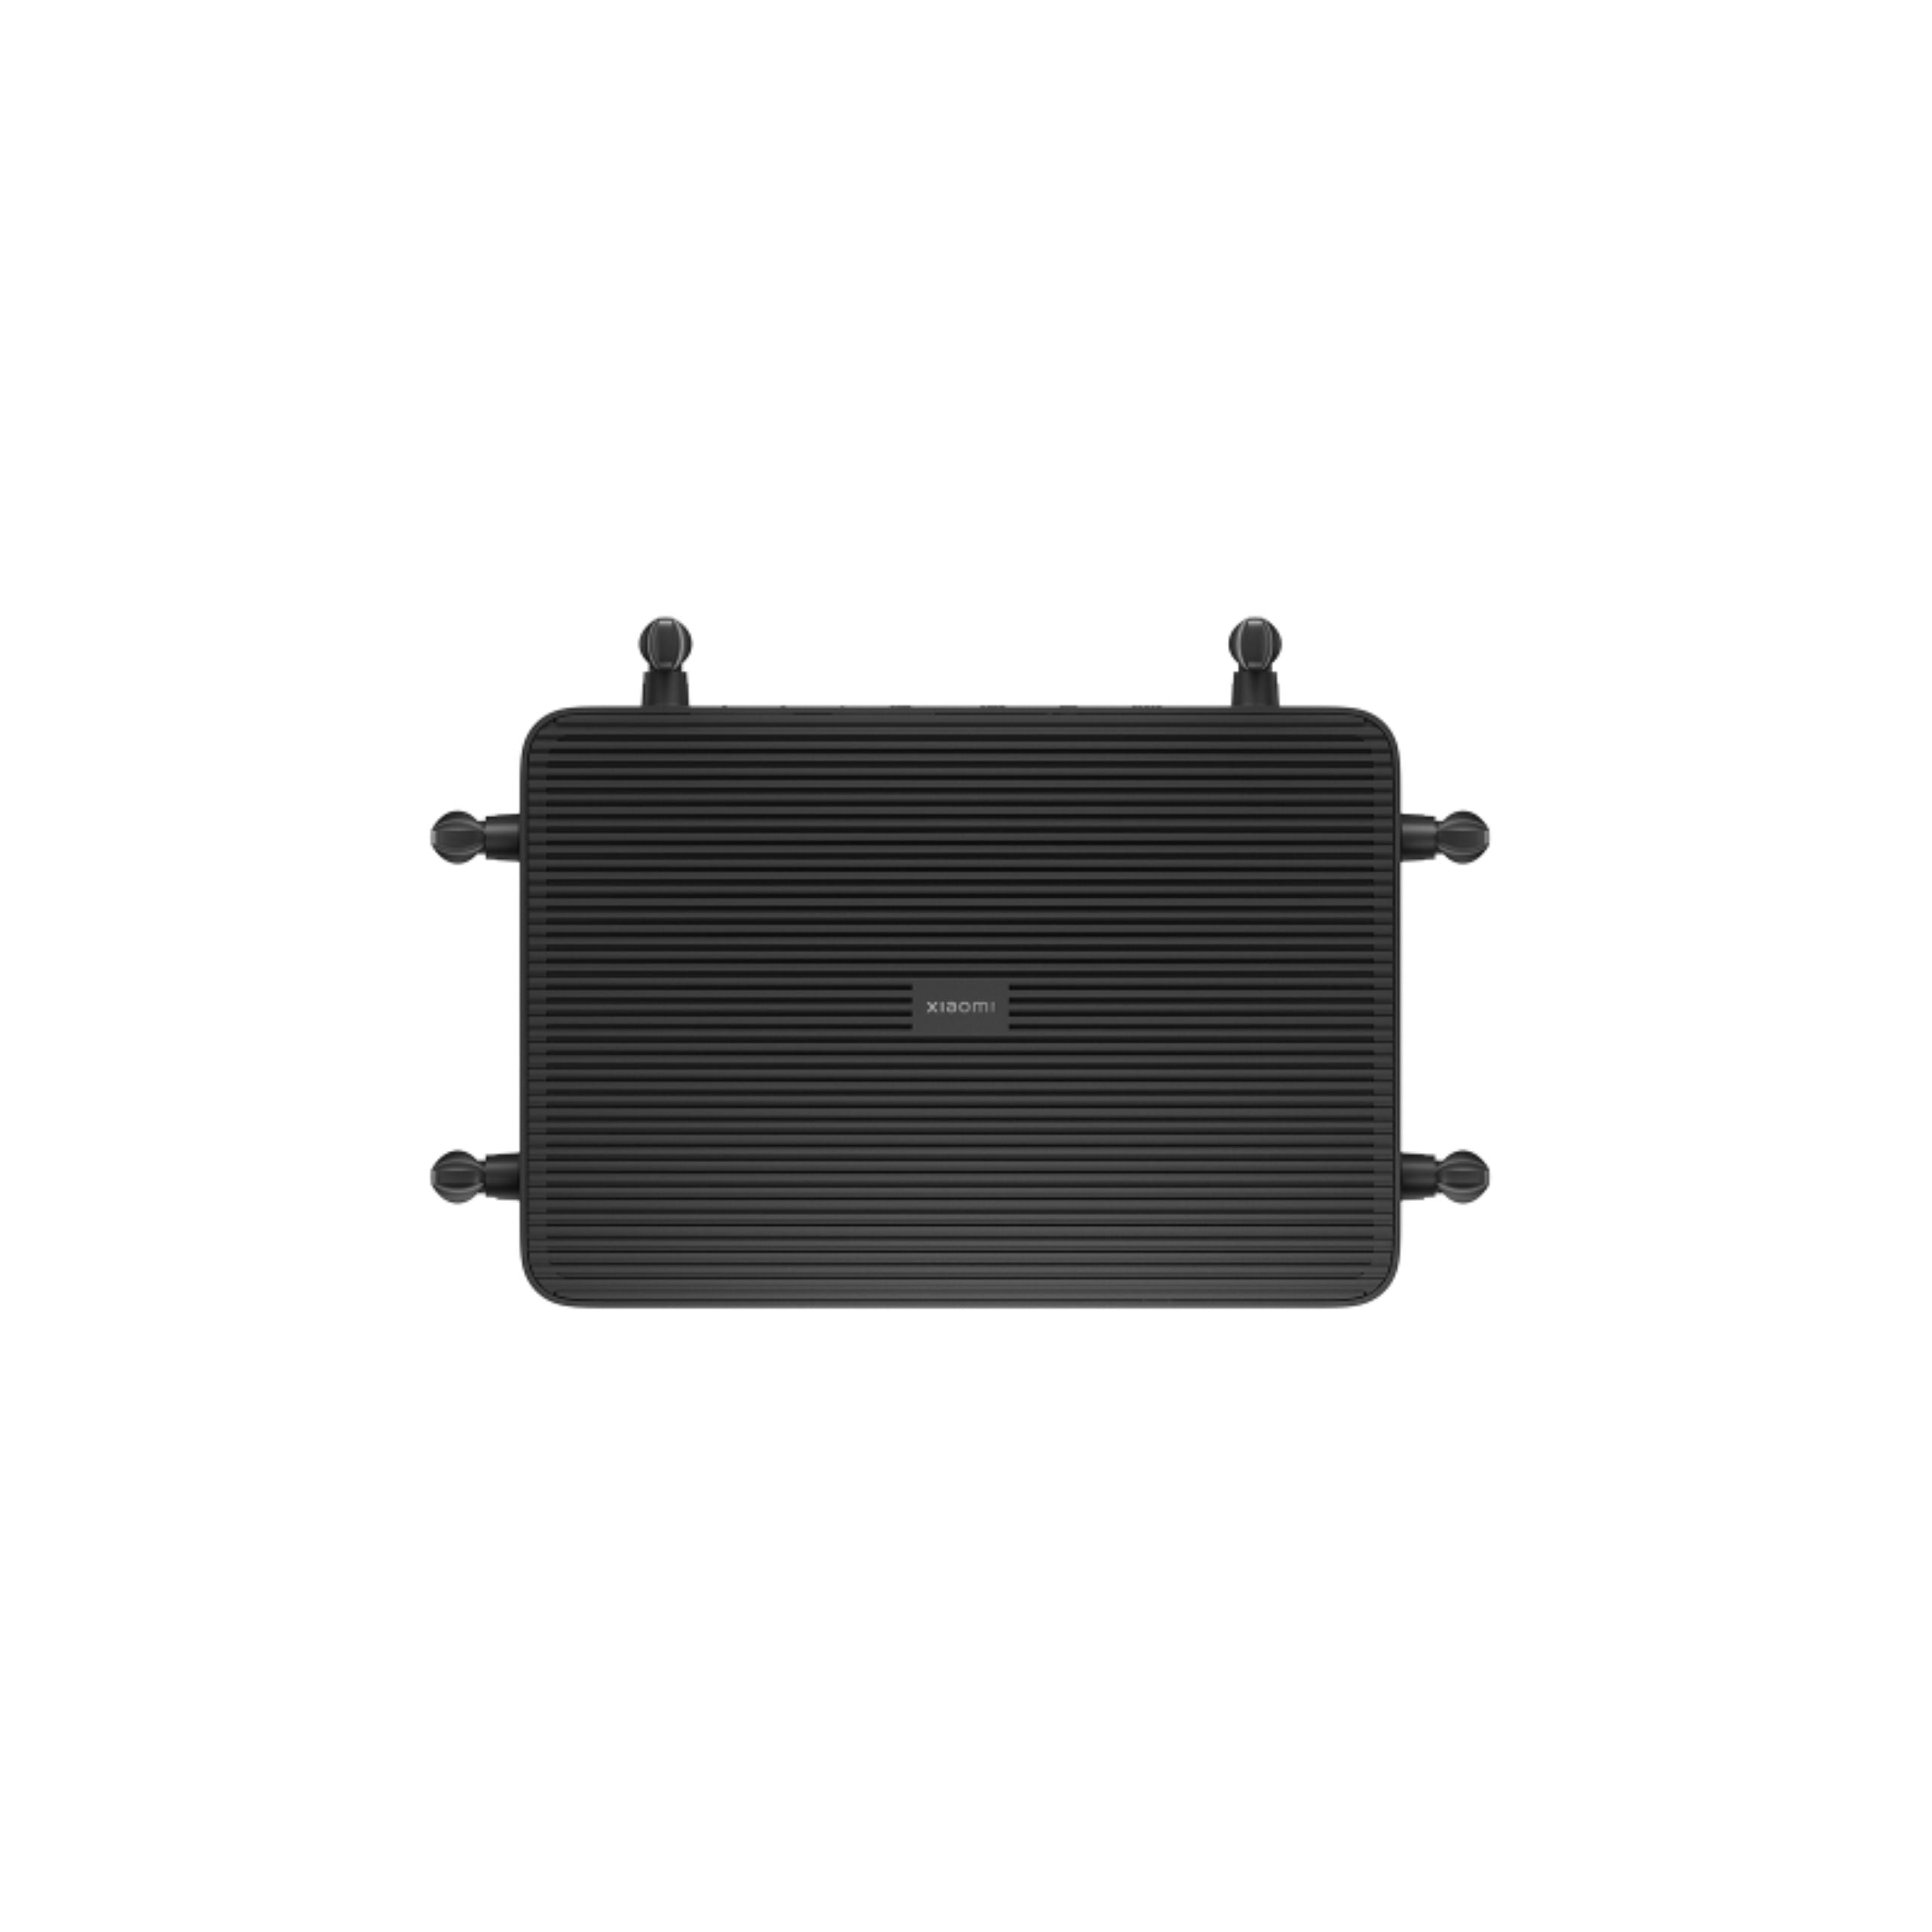 Xiaomi Router AX3200 WiFi 6 - Black